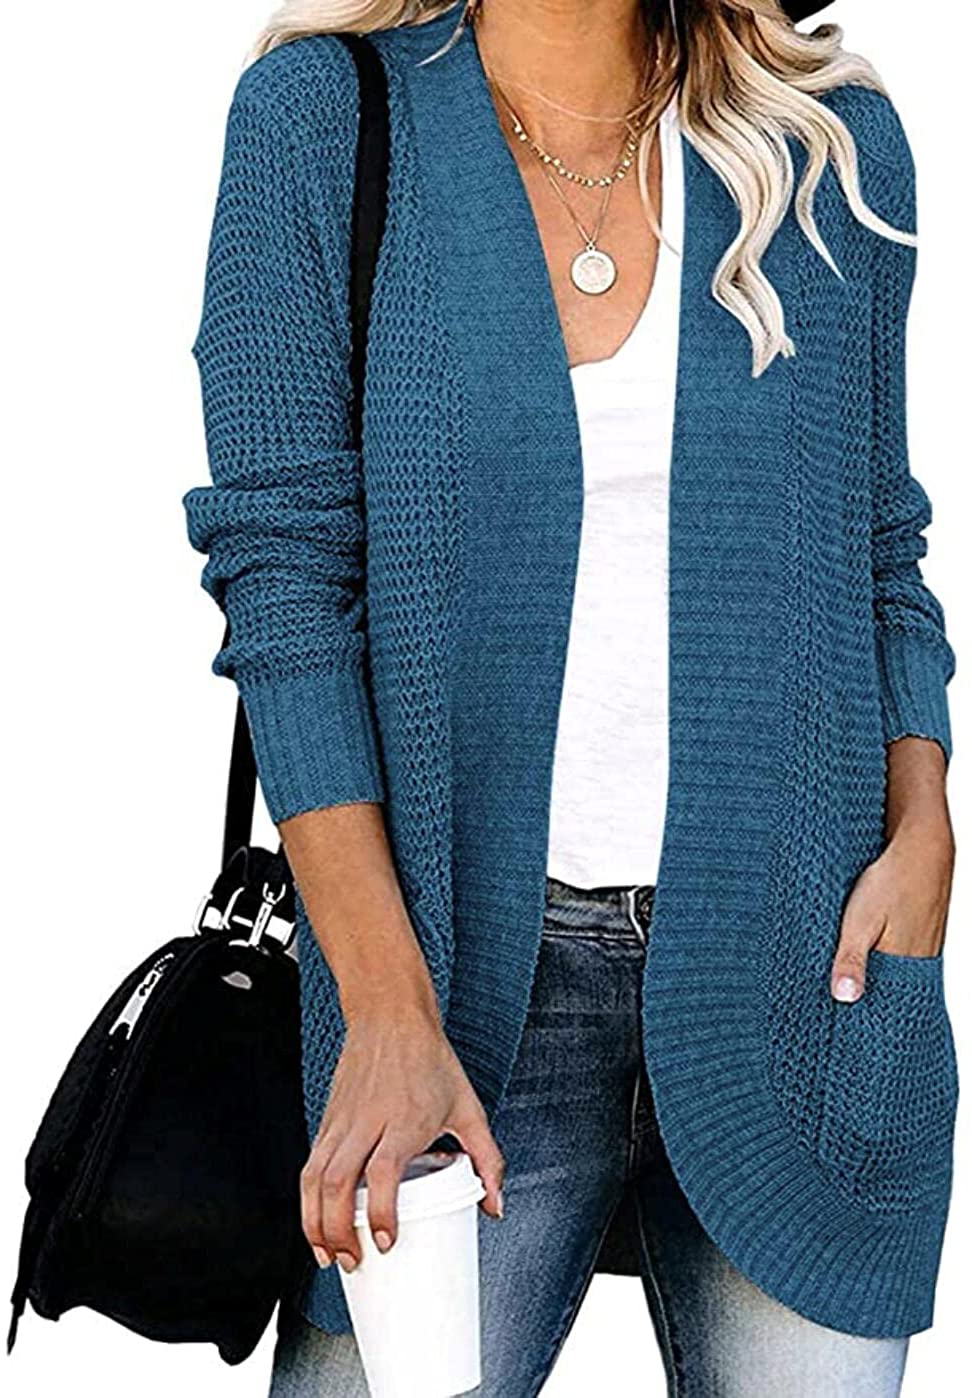 KIRUNDO Women's Open Front Cardigan Long Sleeve Knitted Soft Sweater Loose  Light | eBay